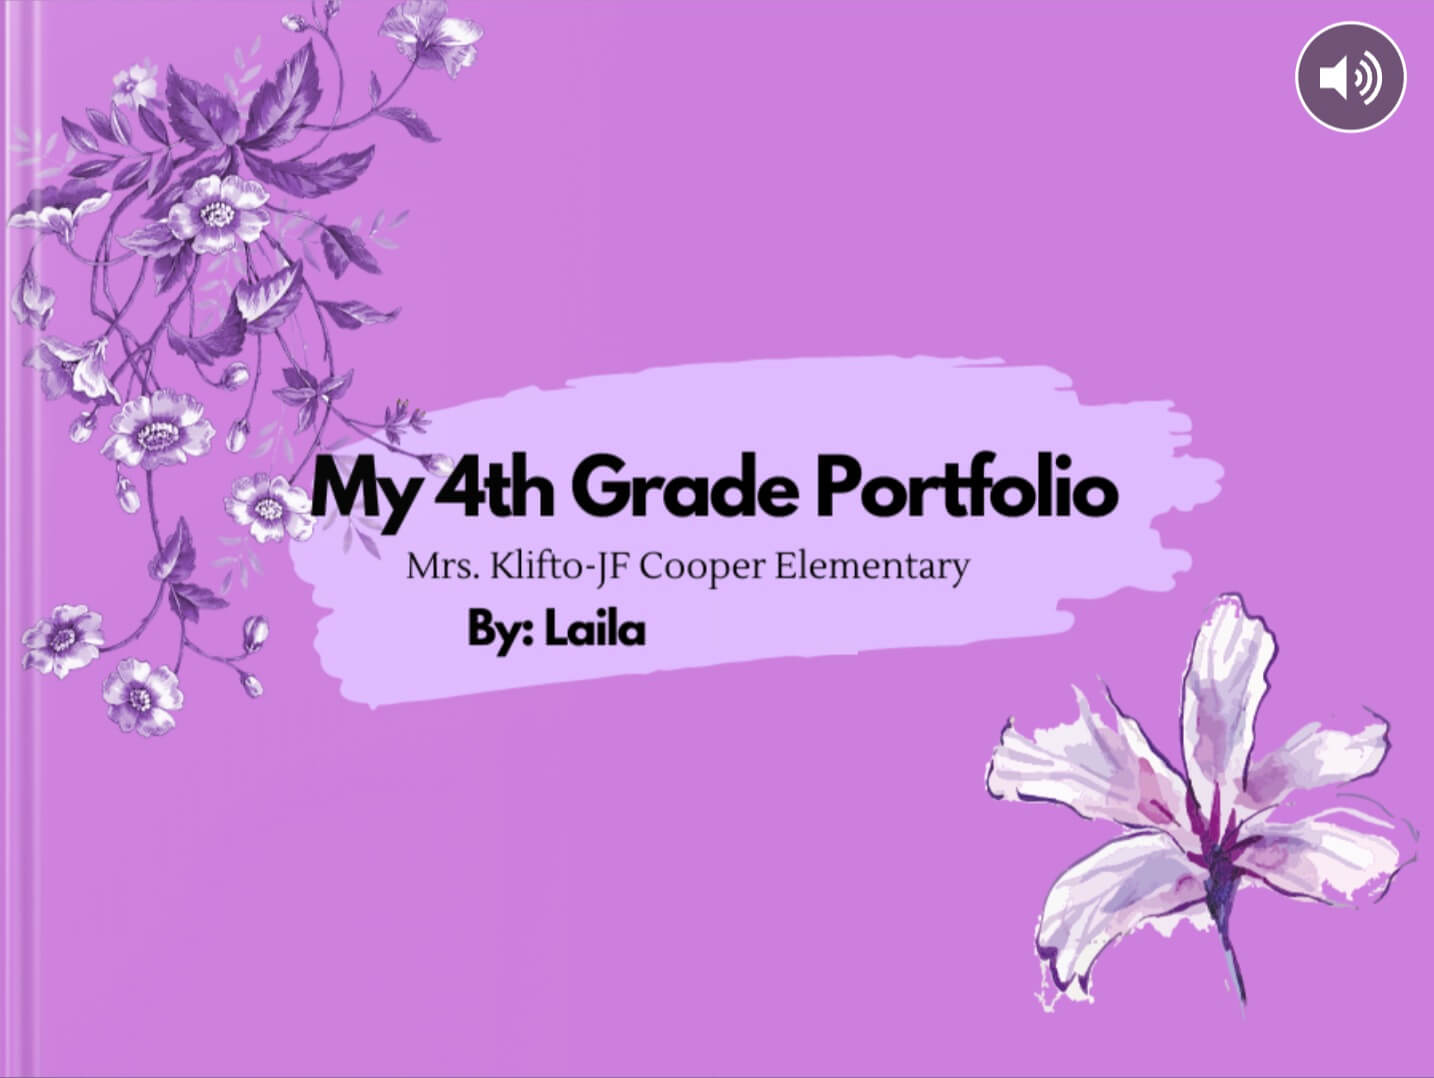 My 4th grade portfolio by Laila